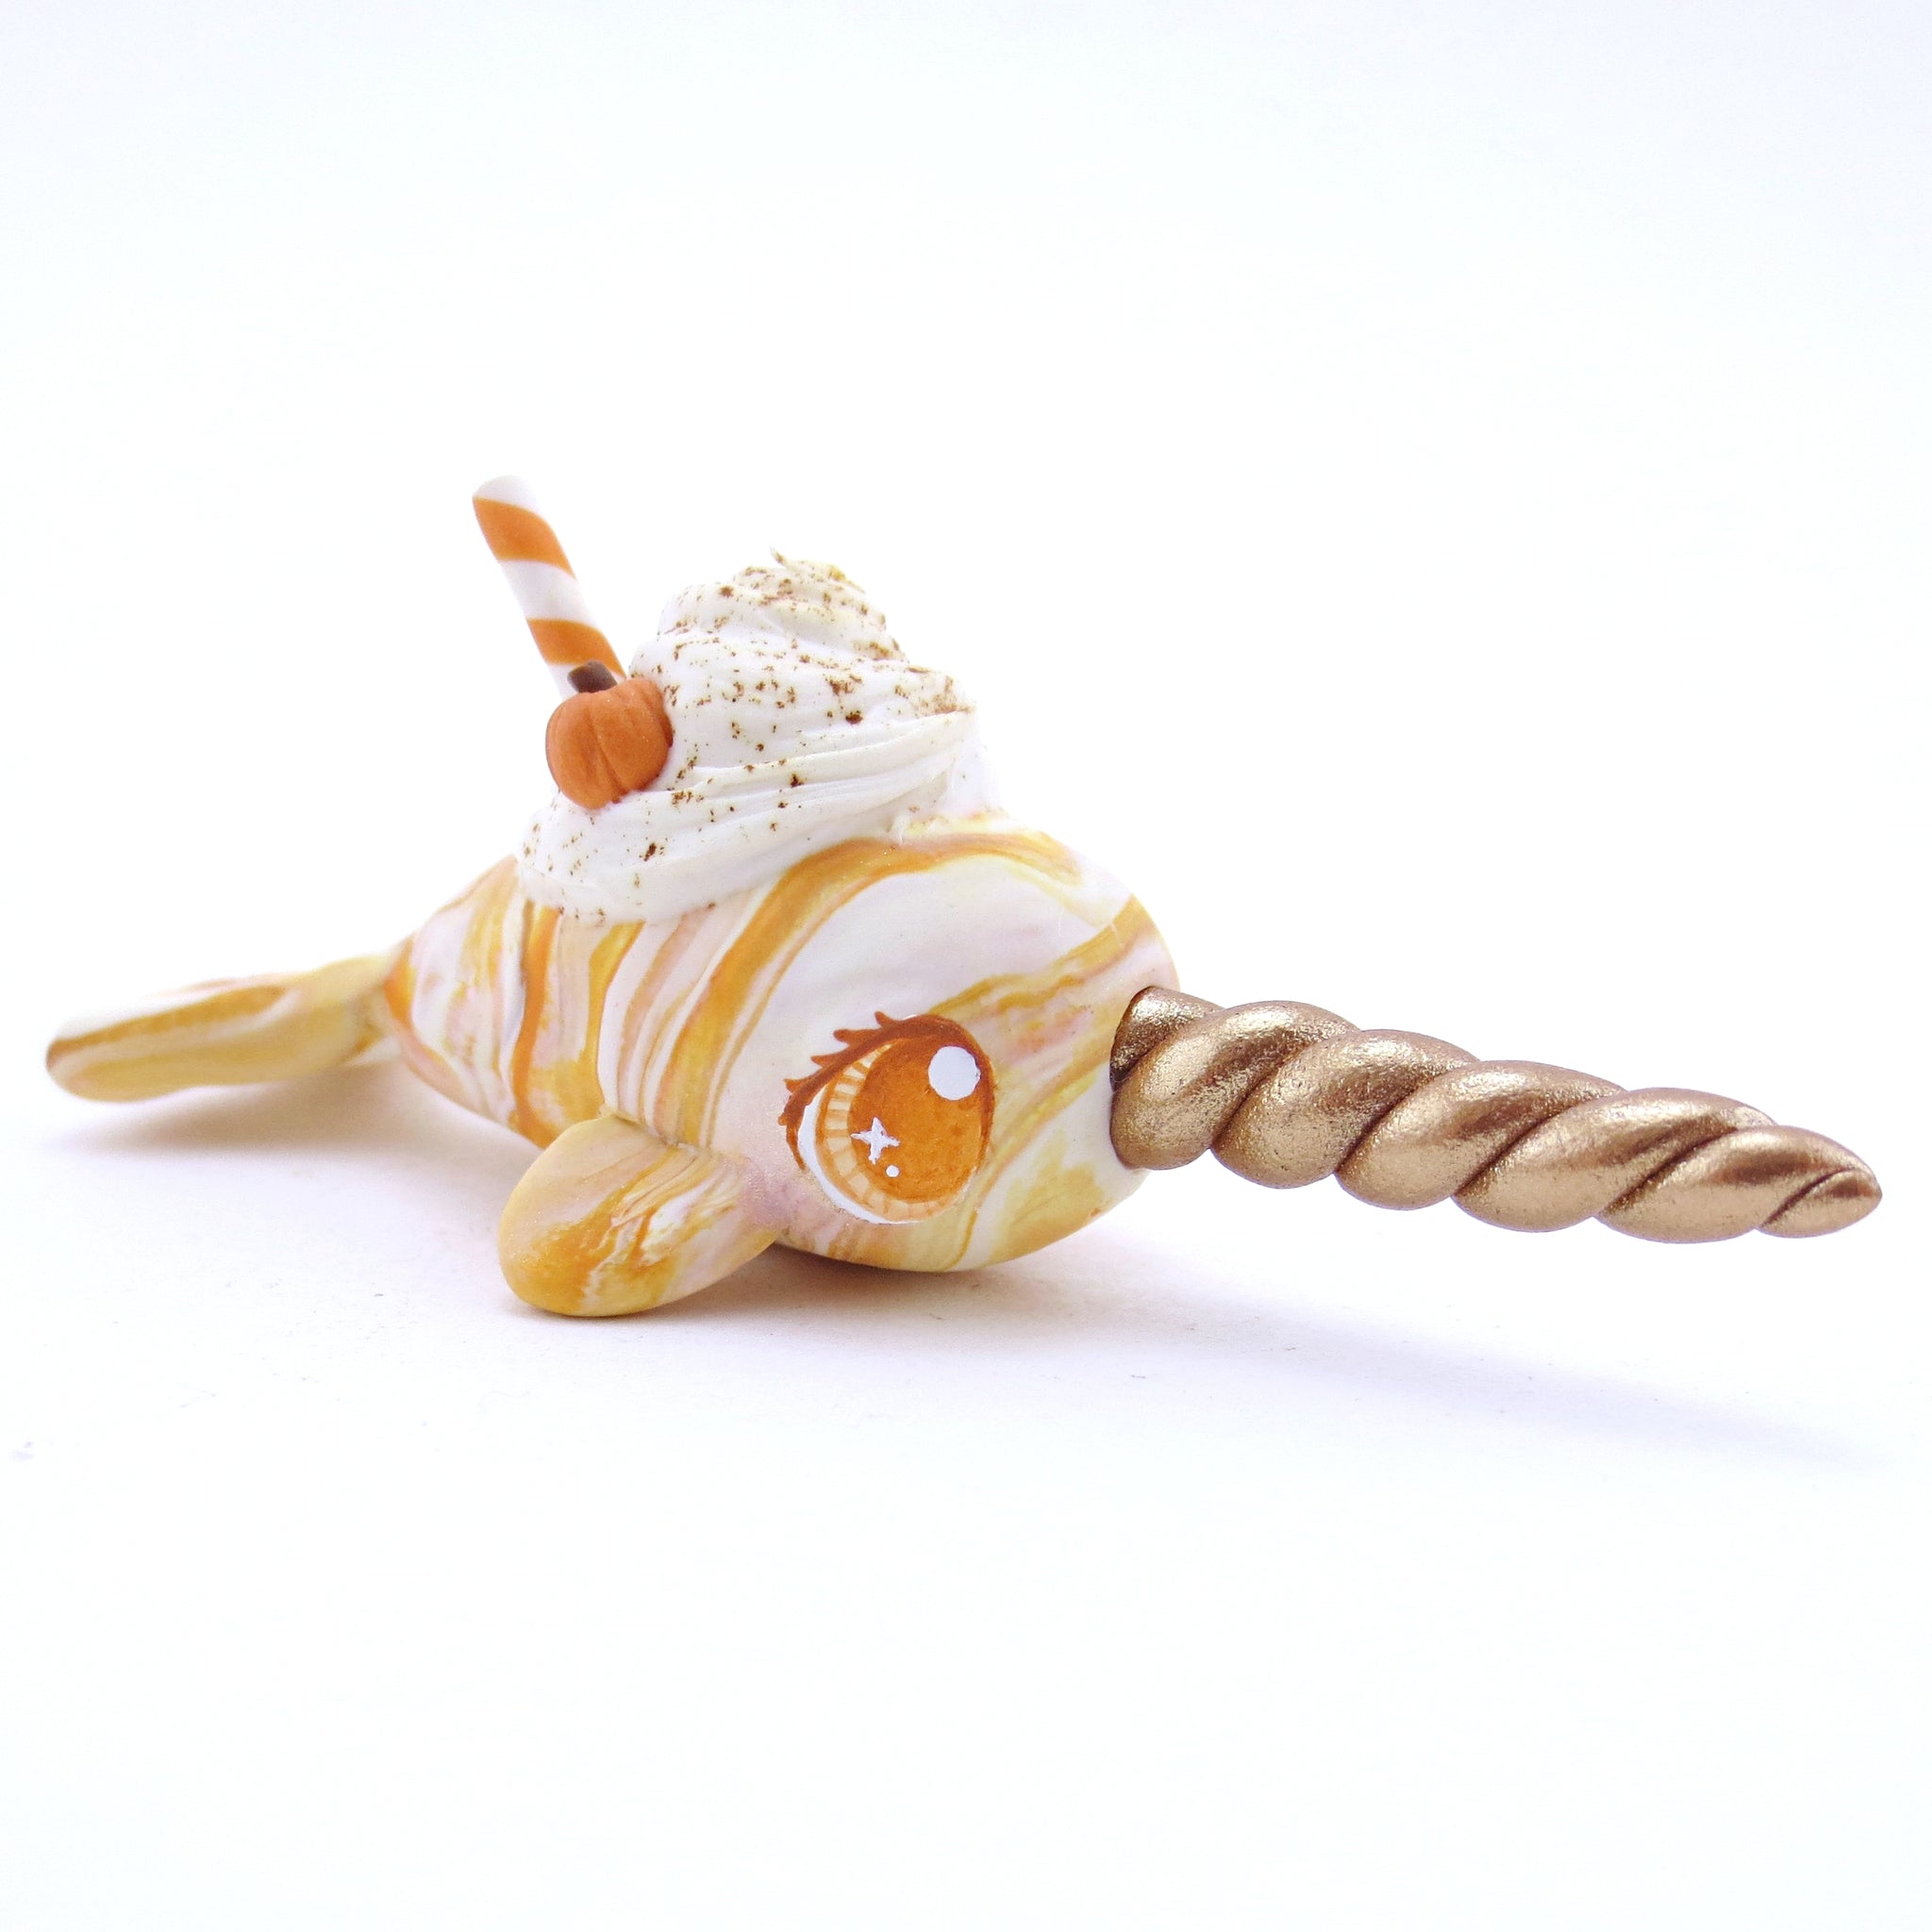 Pumpkin Spice Vanilla Swirl Narwhal Figurine - Striped Swirl Version - Polymer Clay Fall Animals